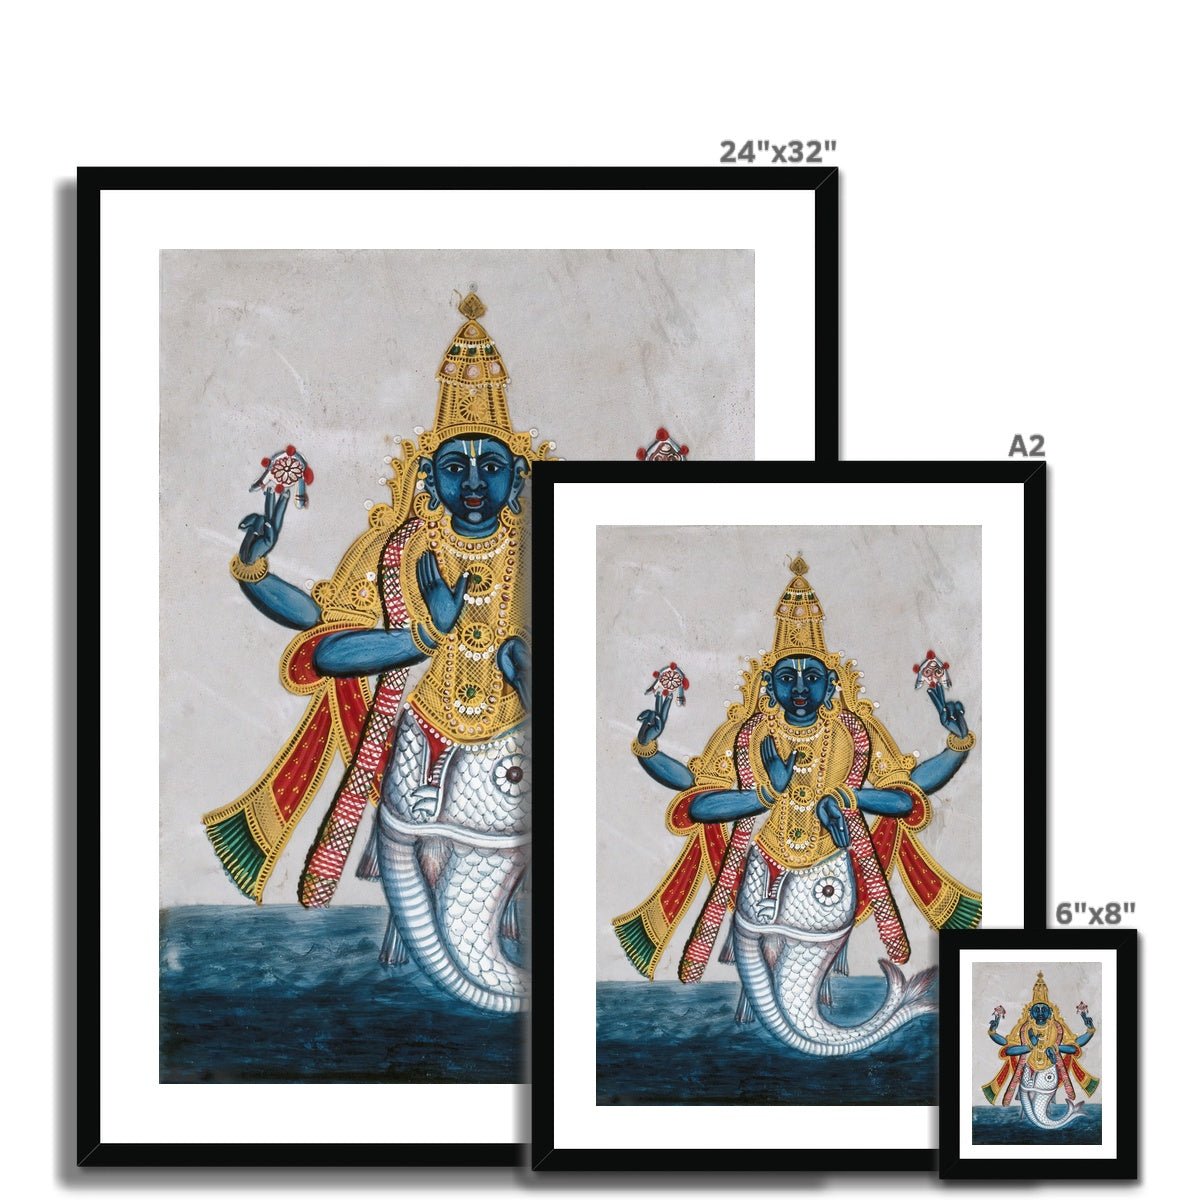 Framed Print 6"x8" / Black Frame Matsya: Vishnu Avatar In the Form of a Fish Hindu Deity Vedic Art Om Antique Yoga Meditation Framed Art Print